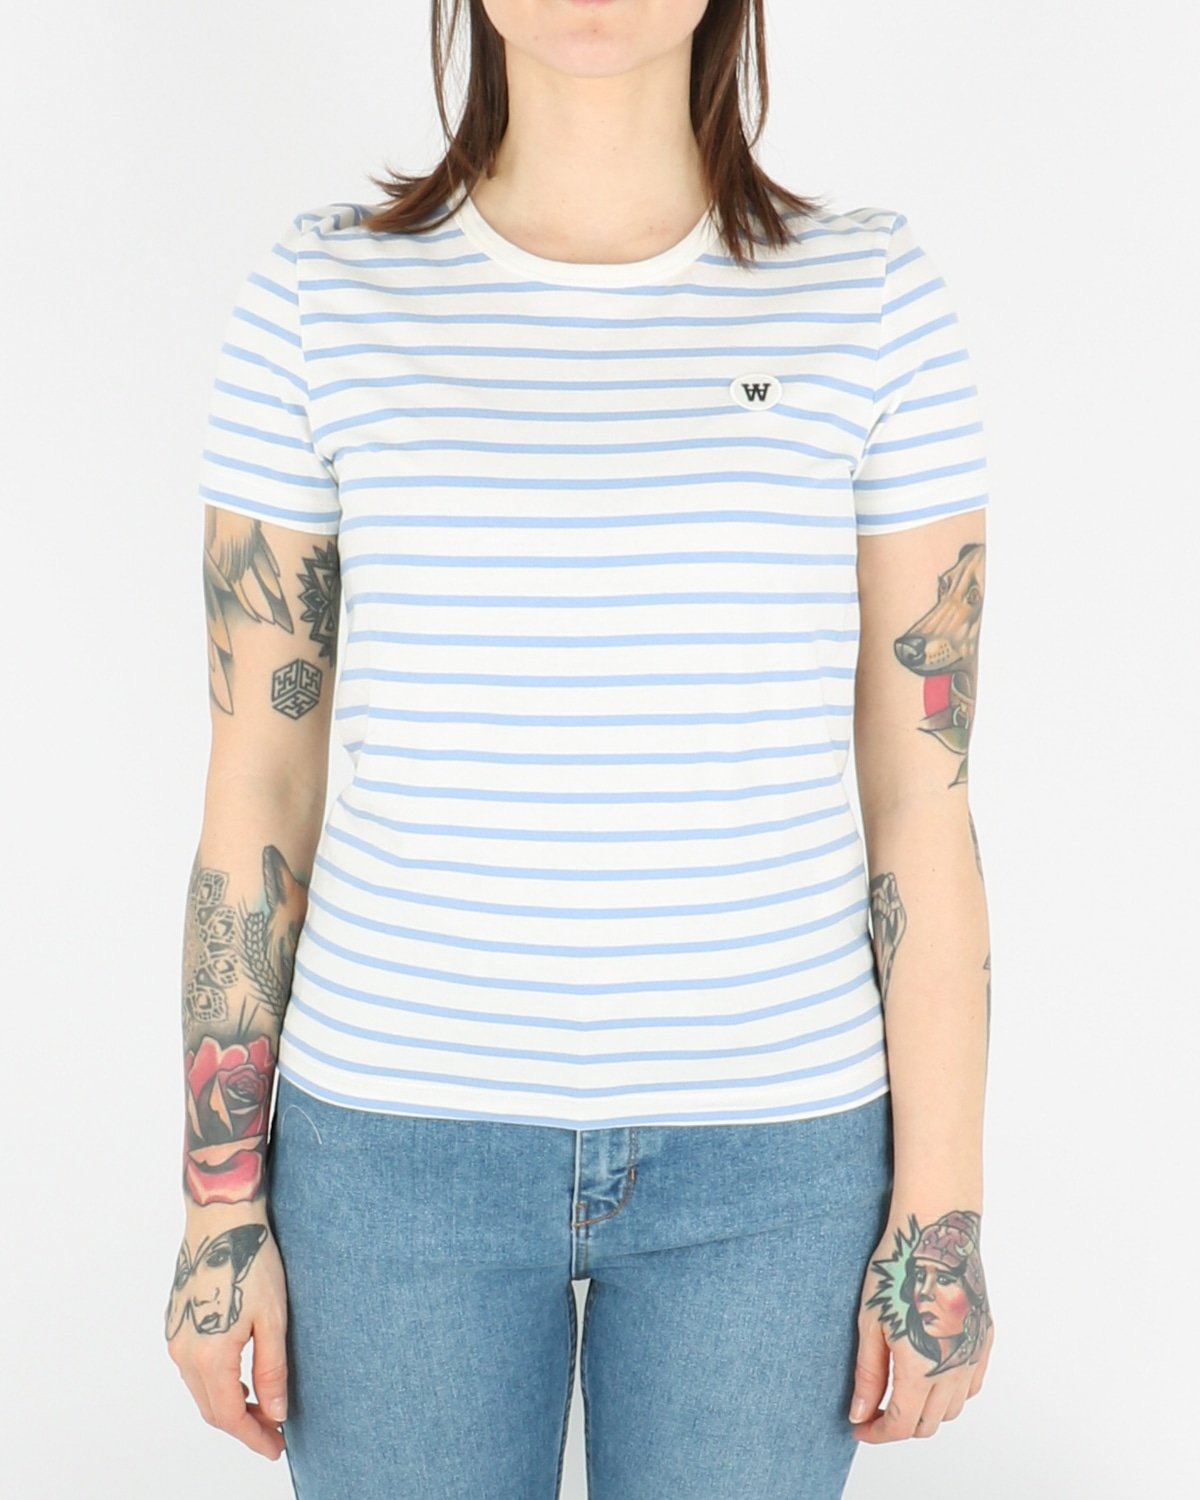 wood wood_uma t-shirt_off-white blue stripes_1_3